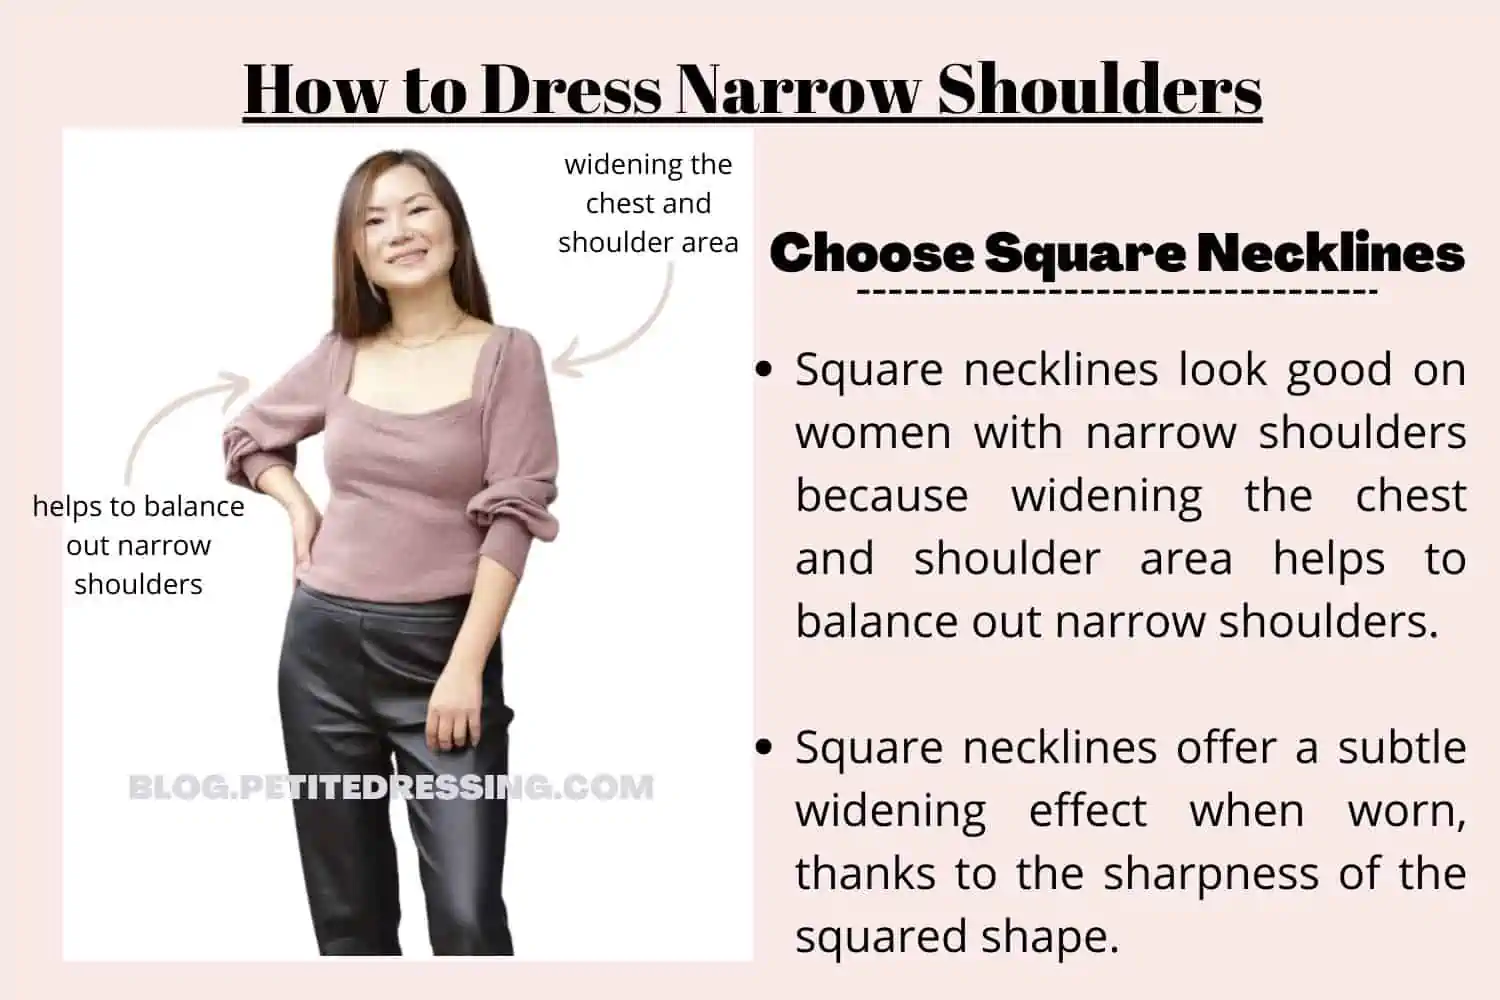 Petite fashion challenge: Narrow shoulders